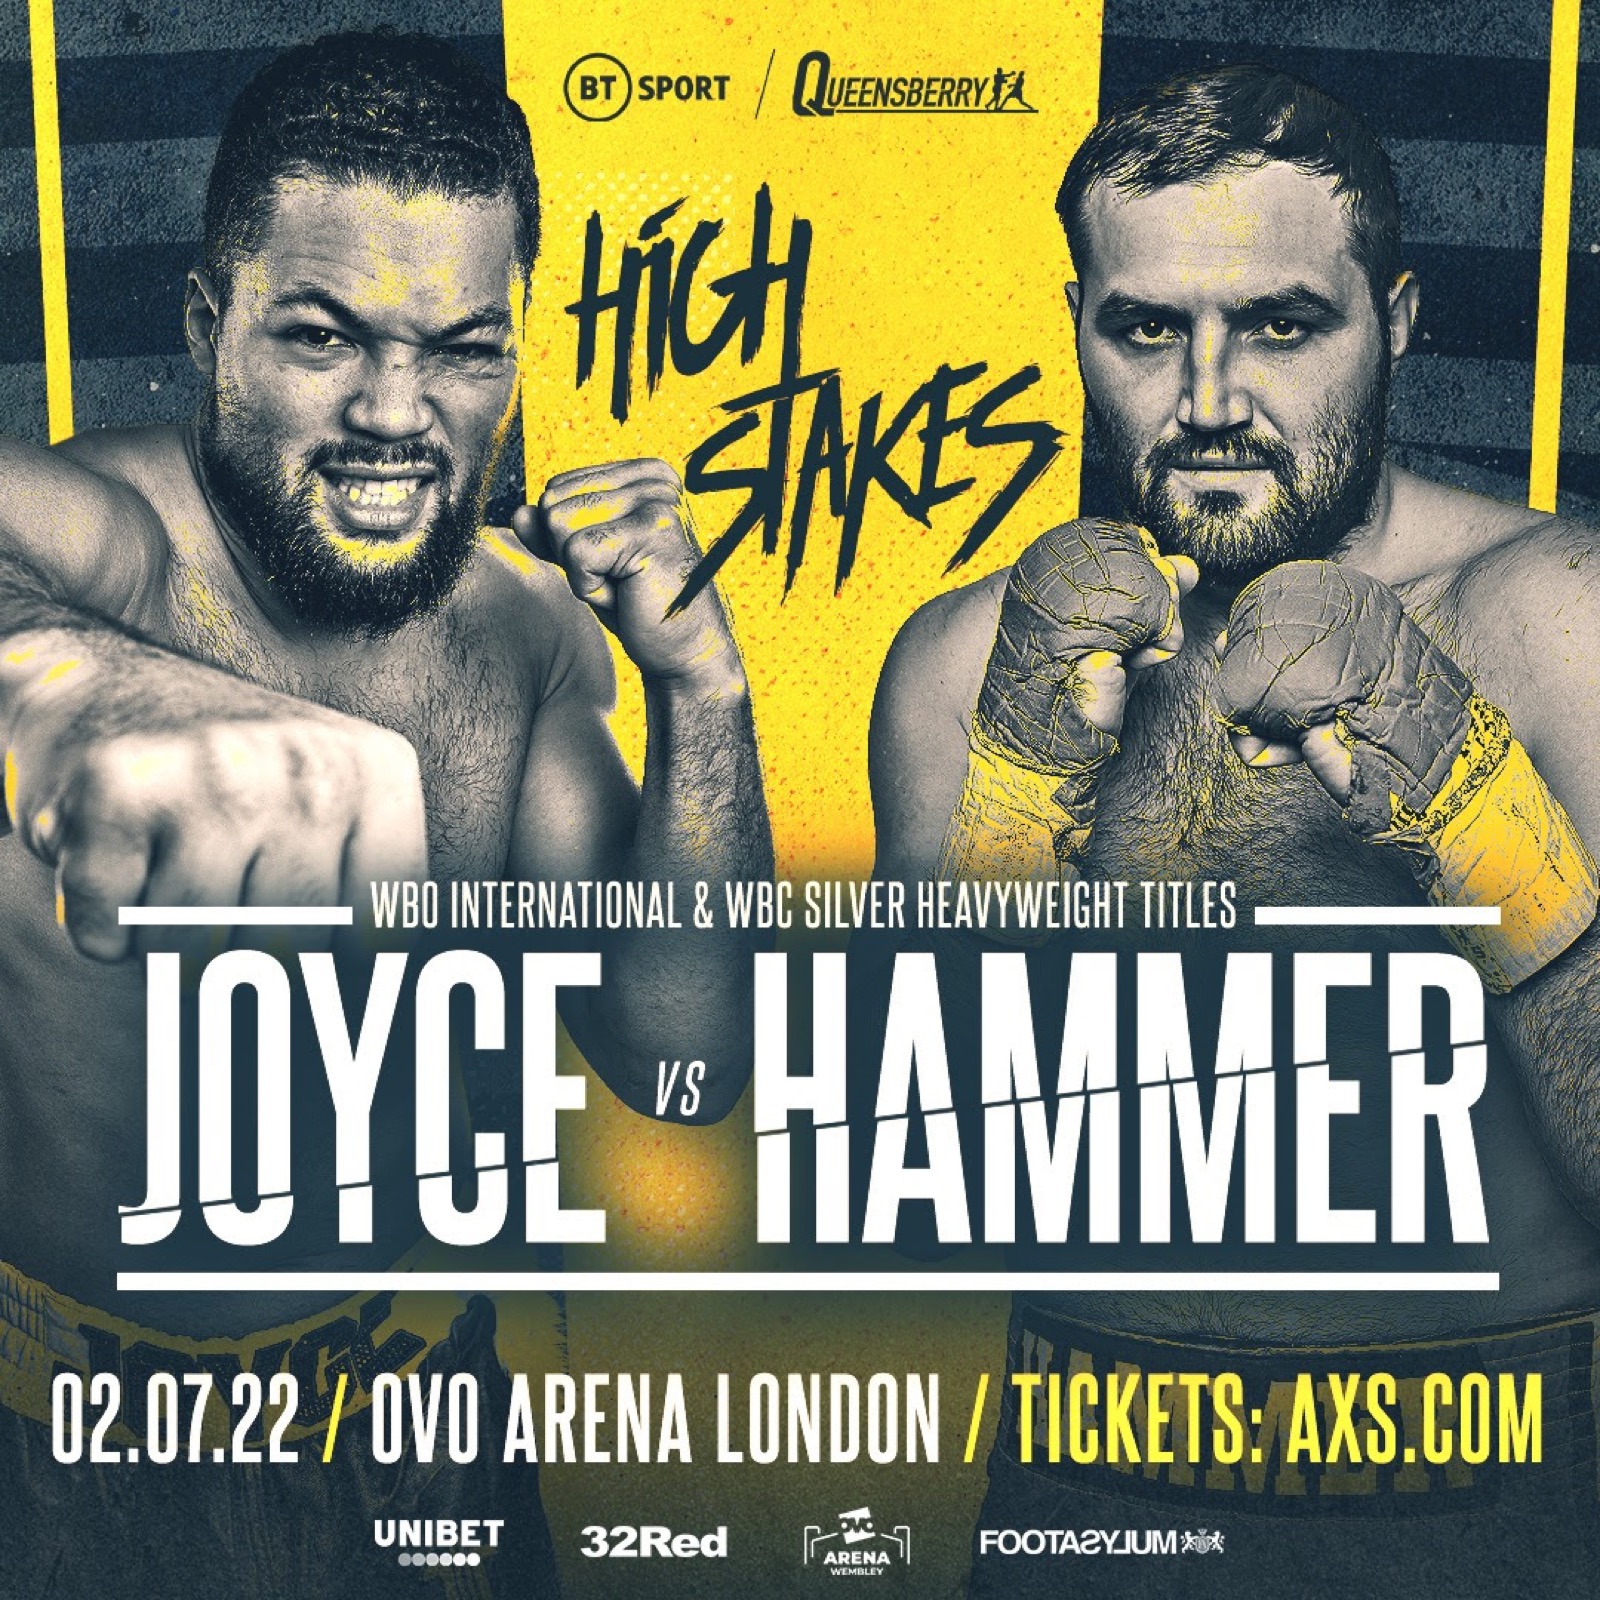 Joe Joyce defeats Christian Hammer - Boxing results